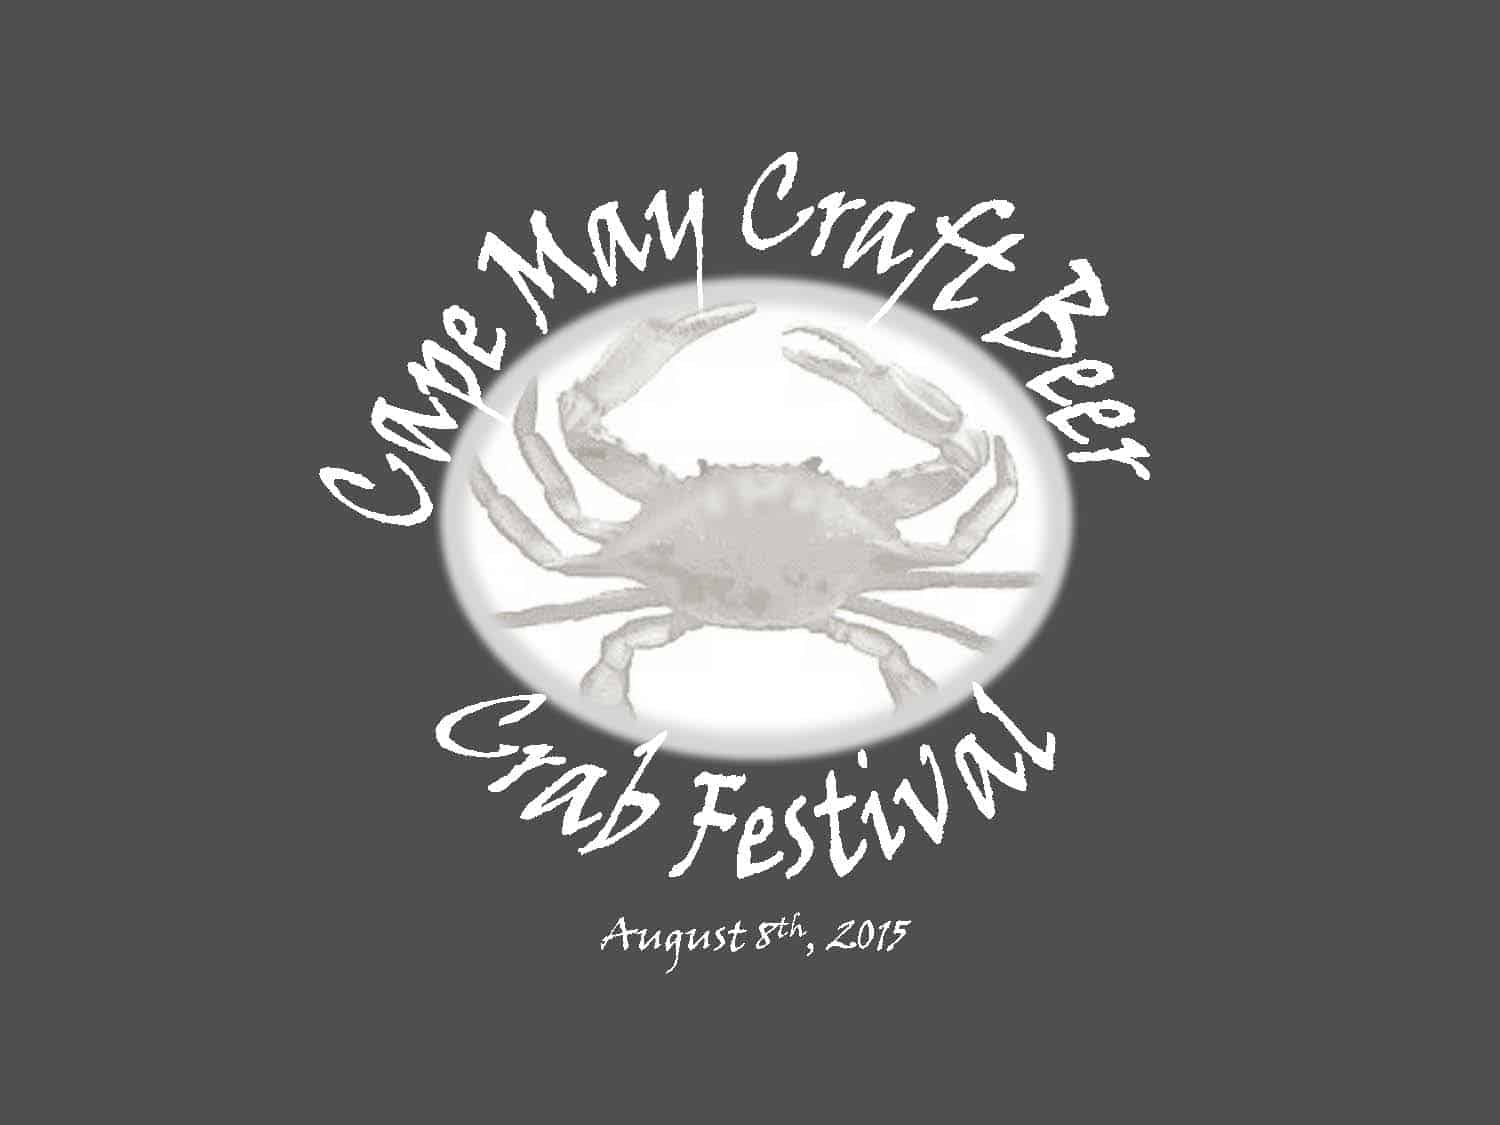 Crabfest 2015